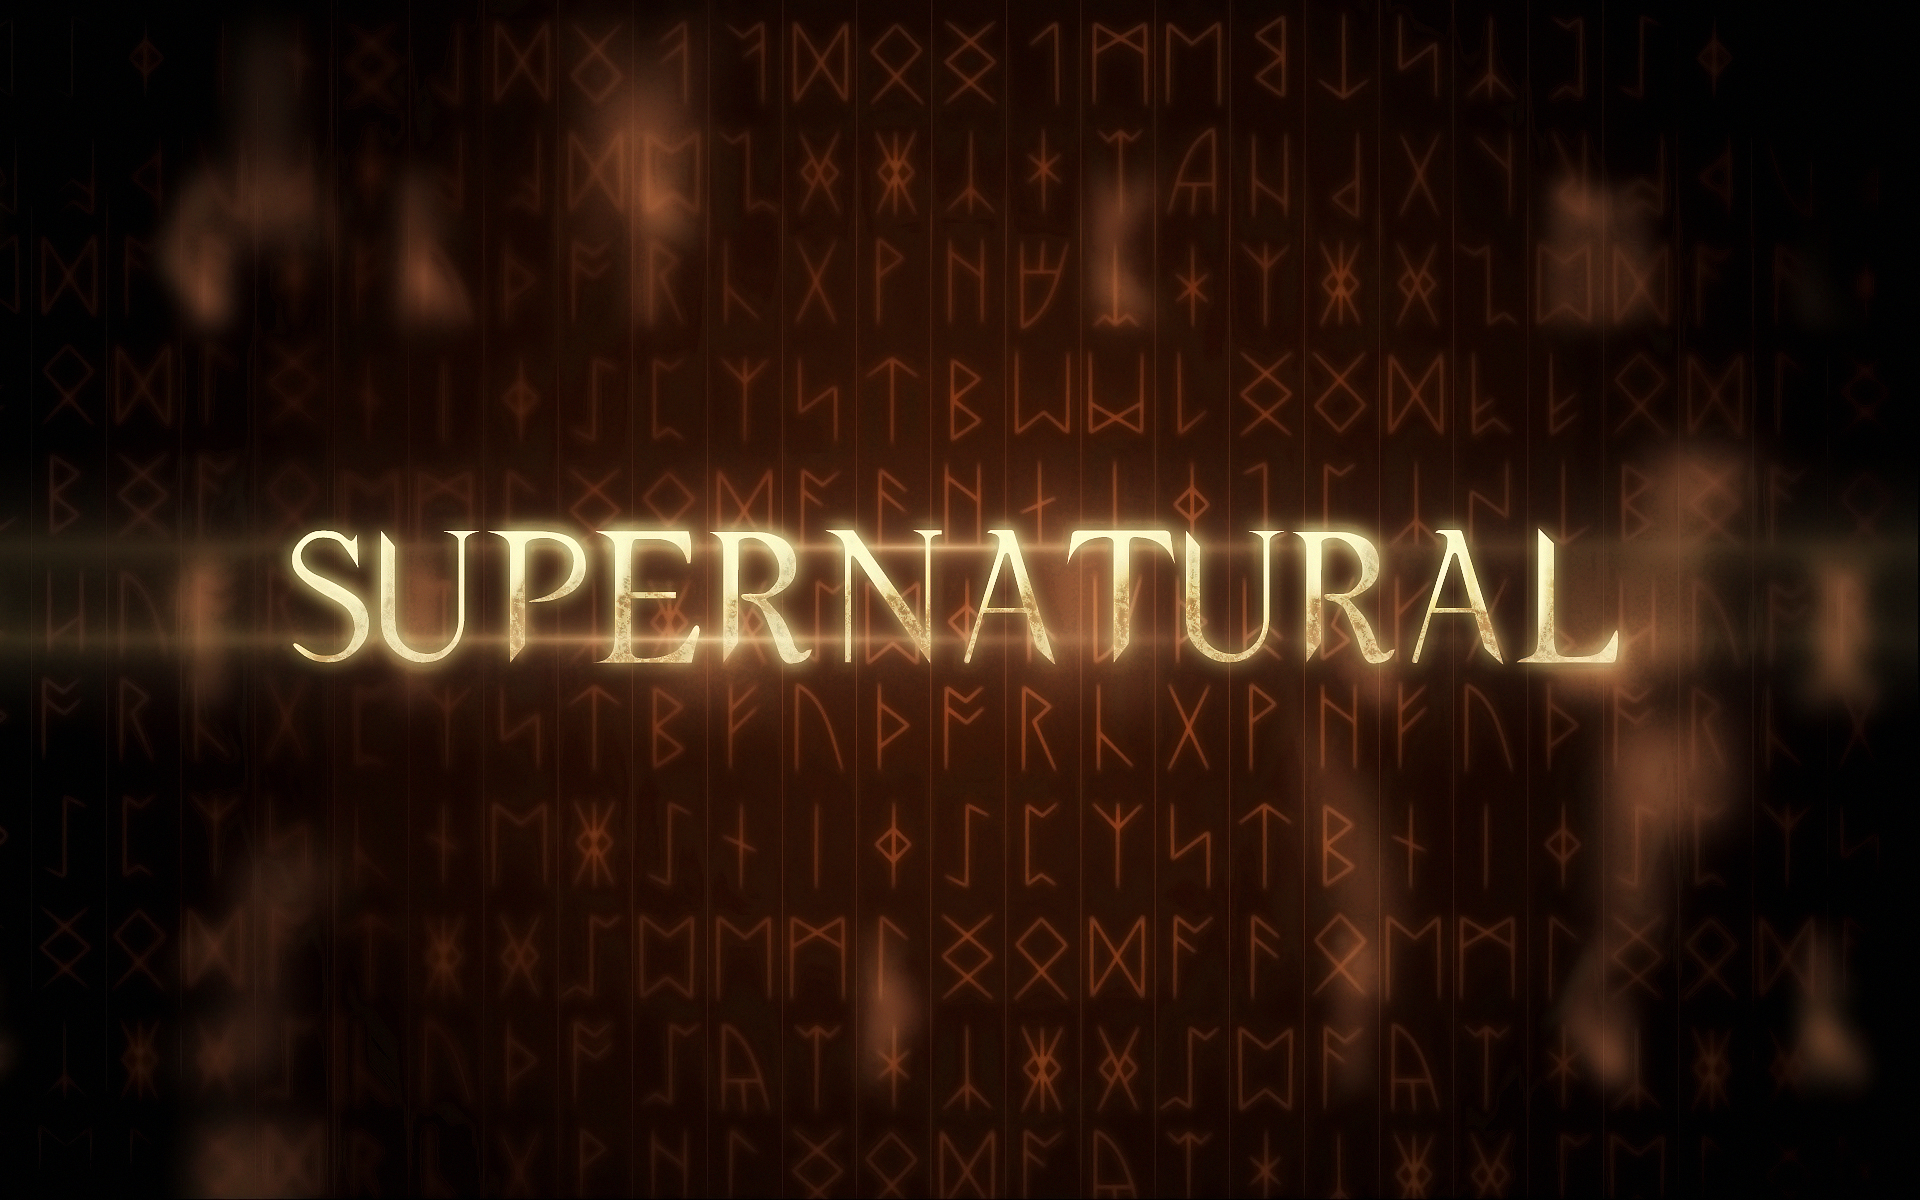 Supernatural wallpaper hd